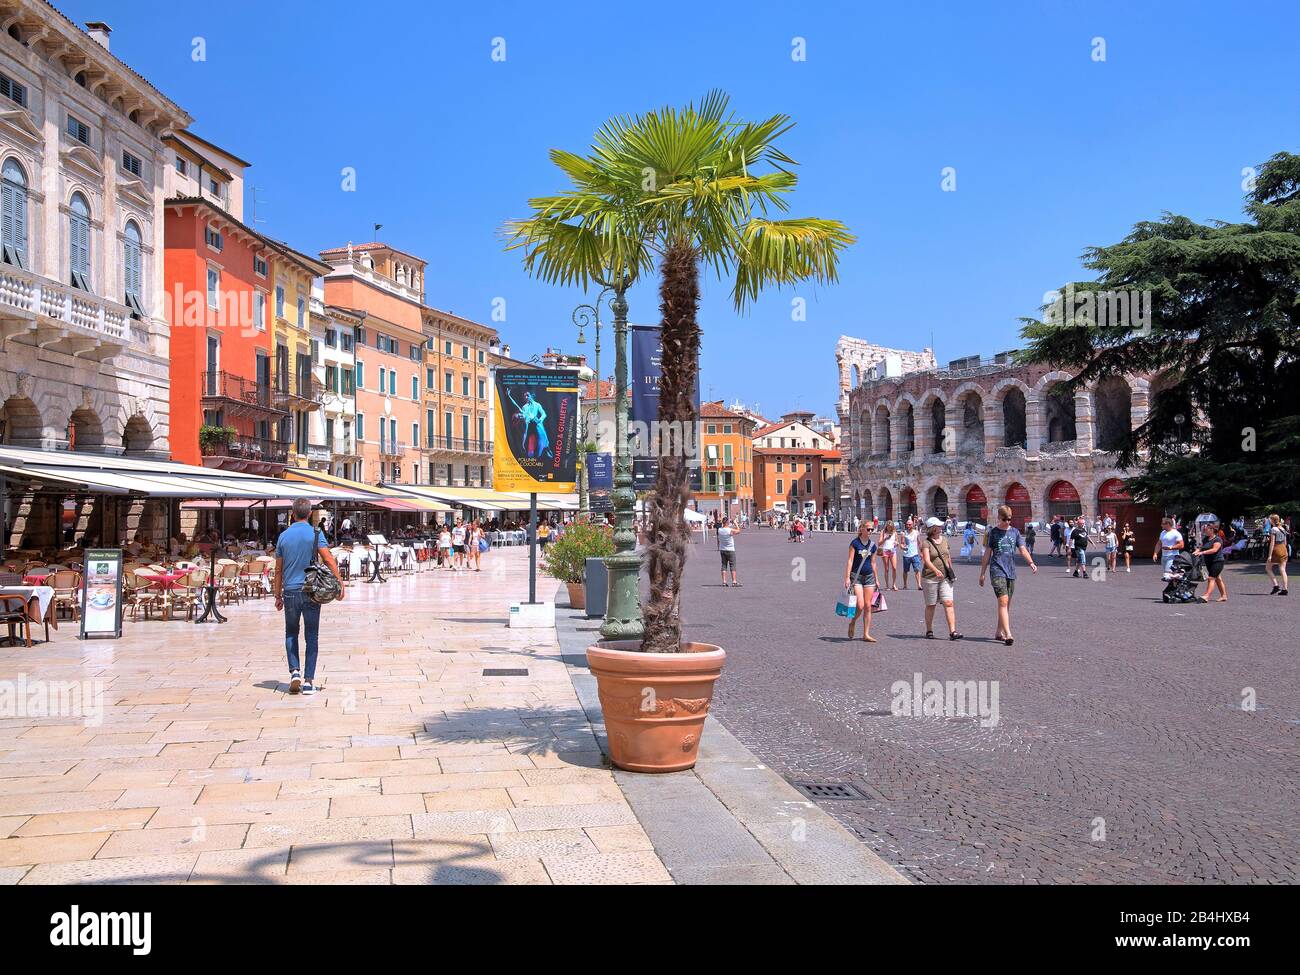 Piazza Bra con Palazzi y anfiteatro Arena, centro histórico de Verona, Veneto, Italia Foto de stock